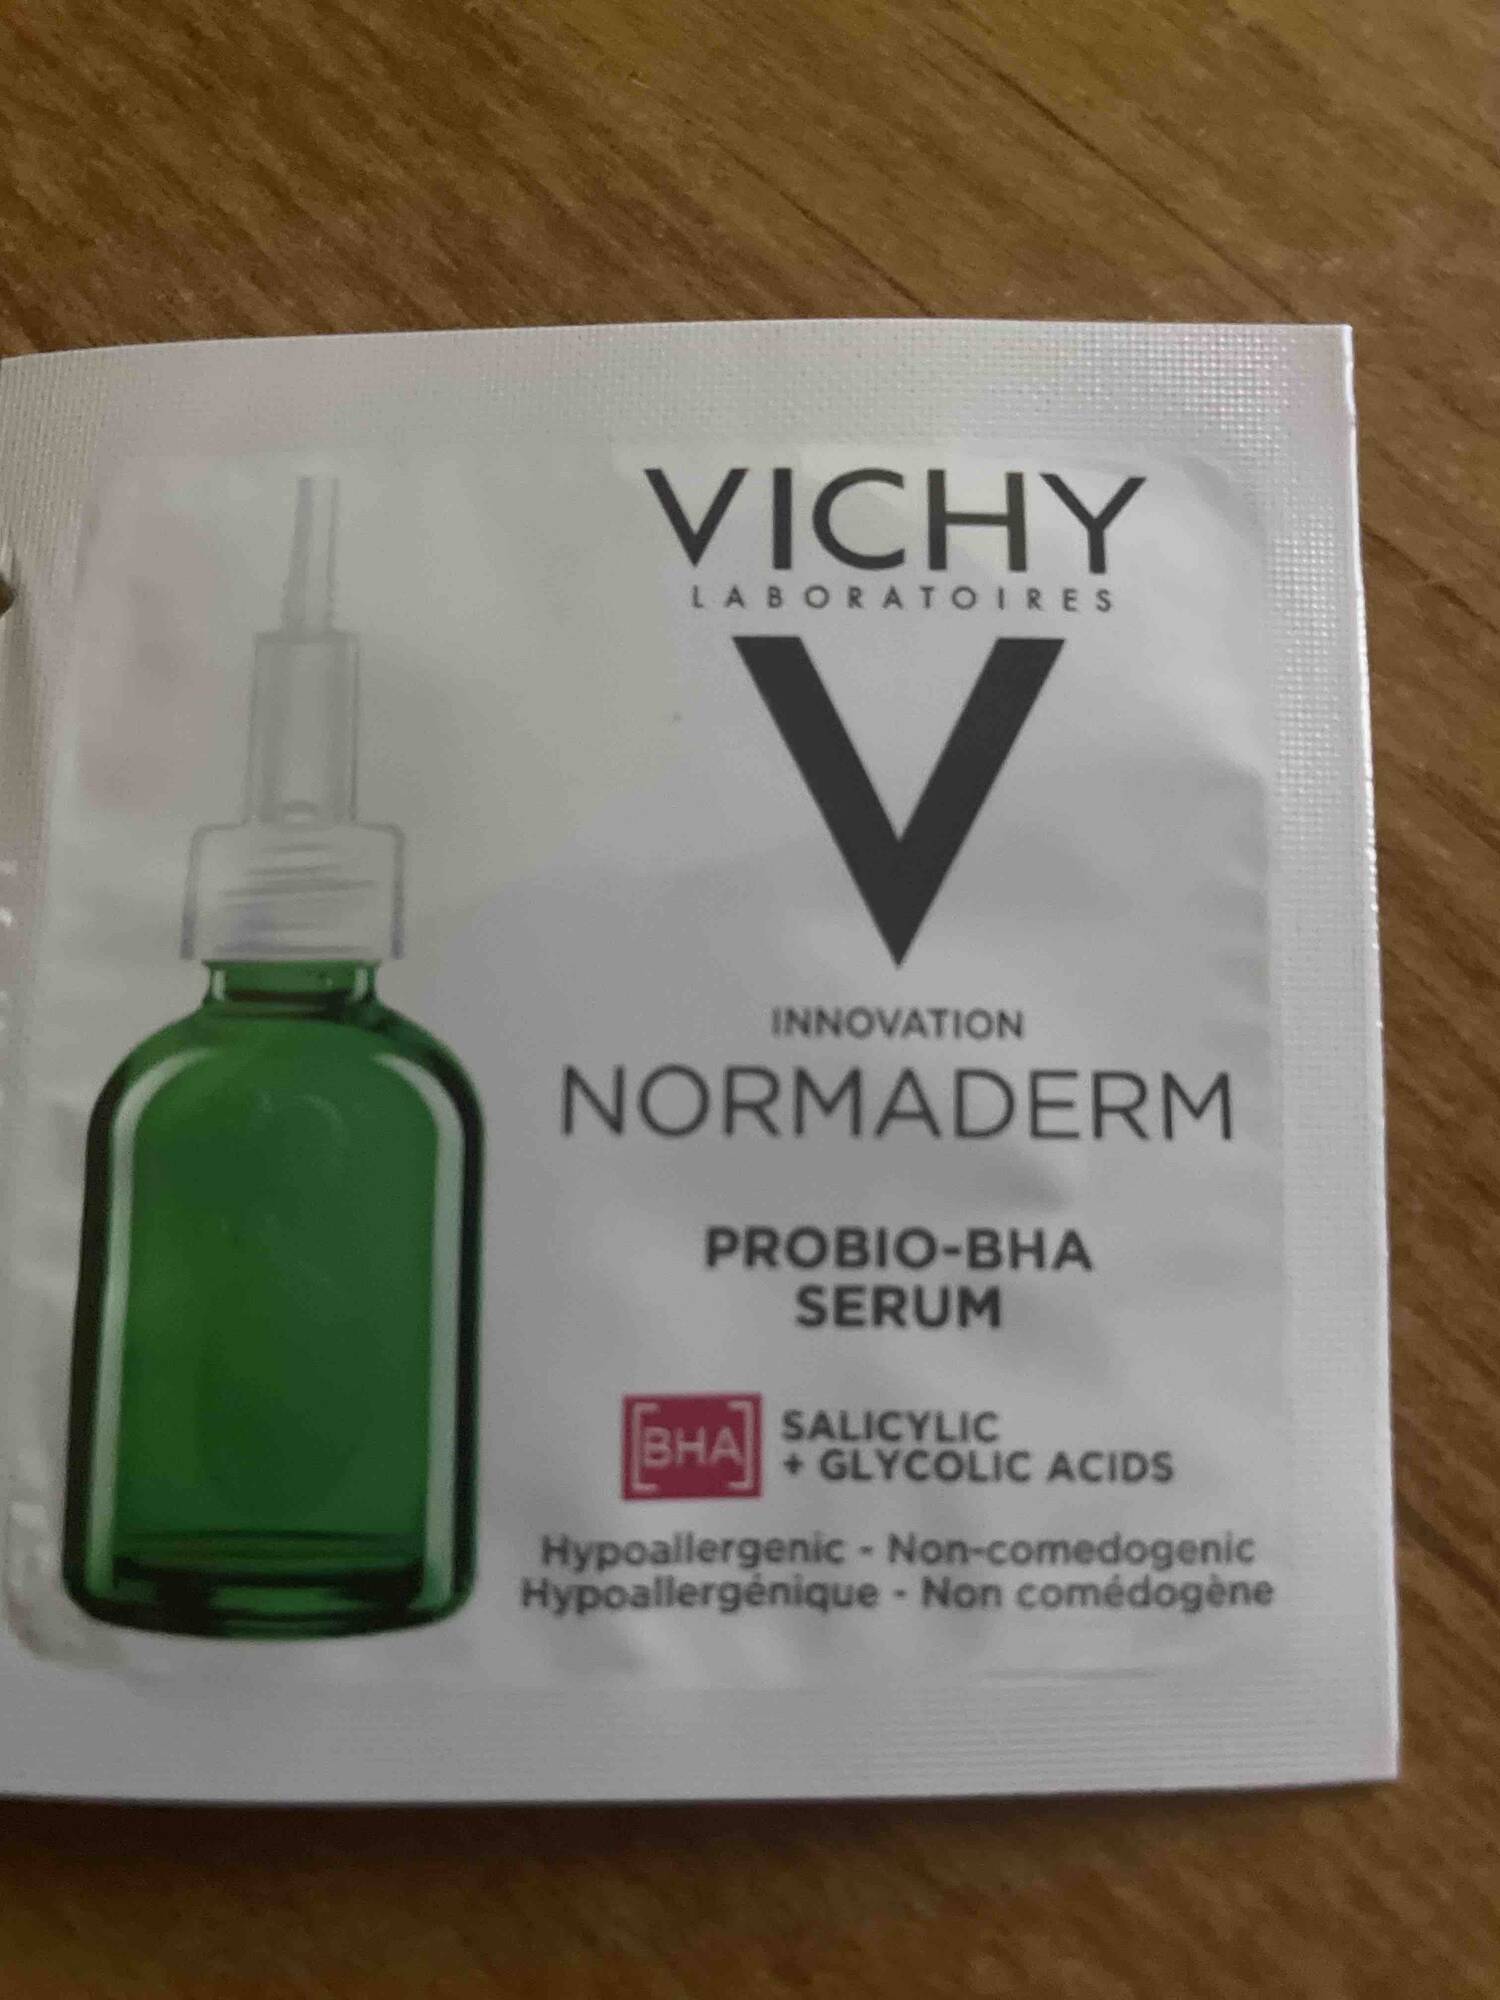 VICHY - Normaderm - Probio bha serum